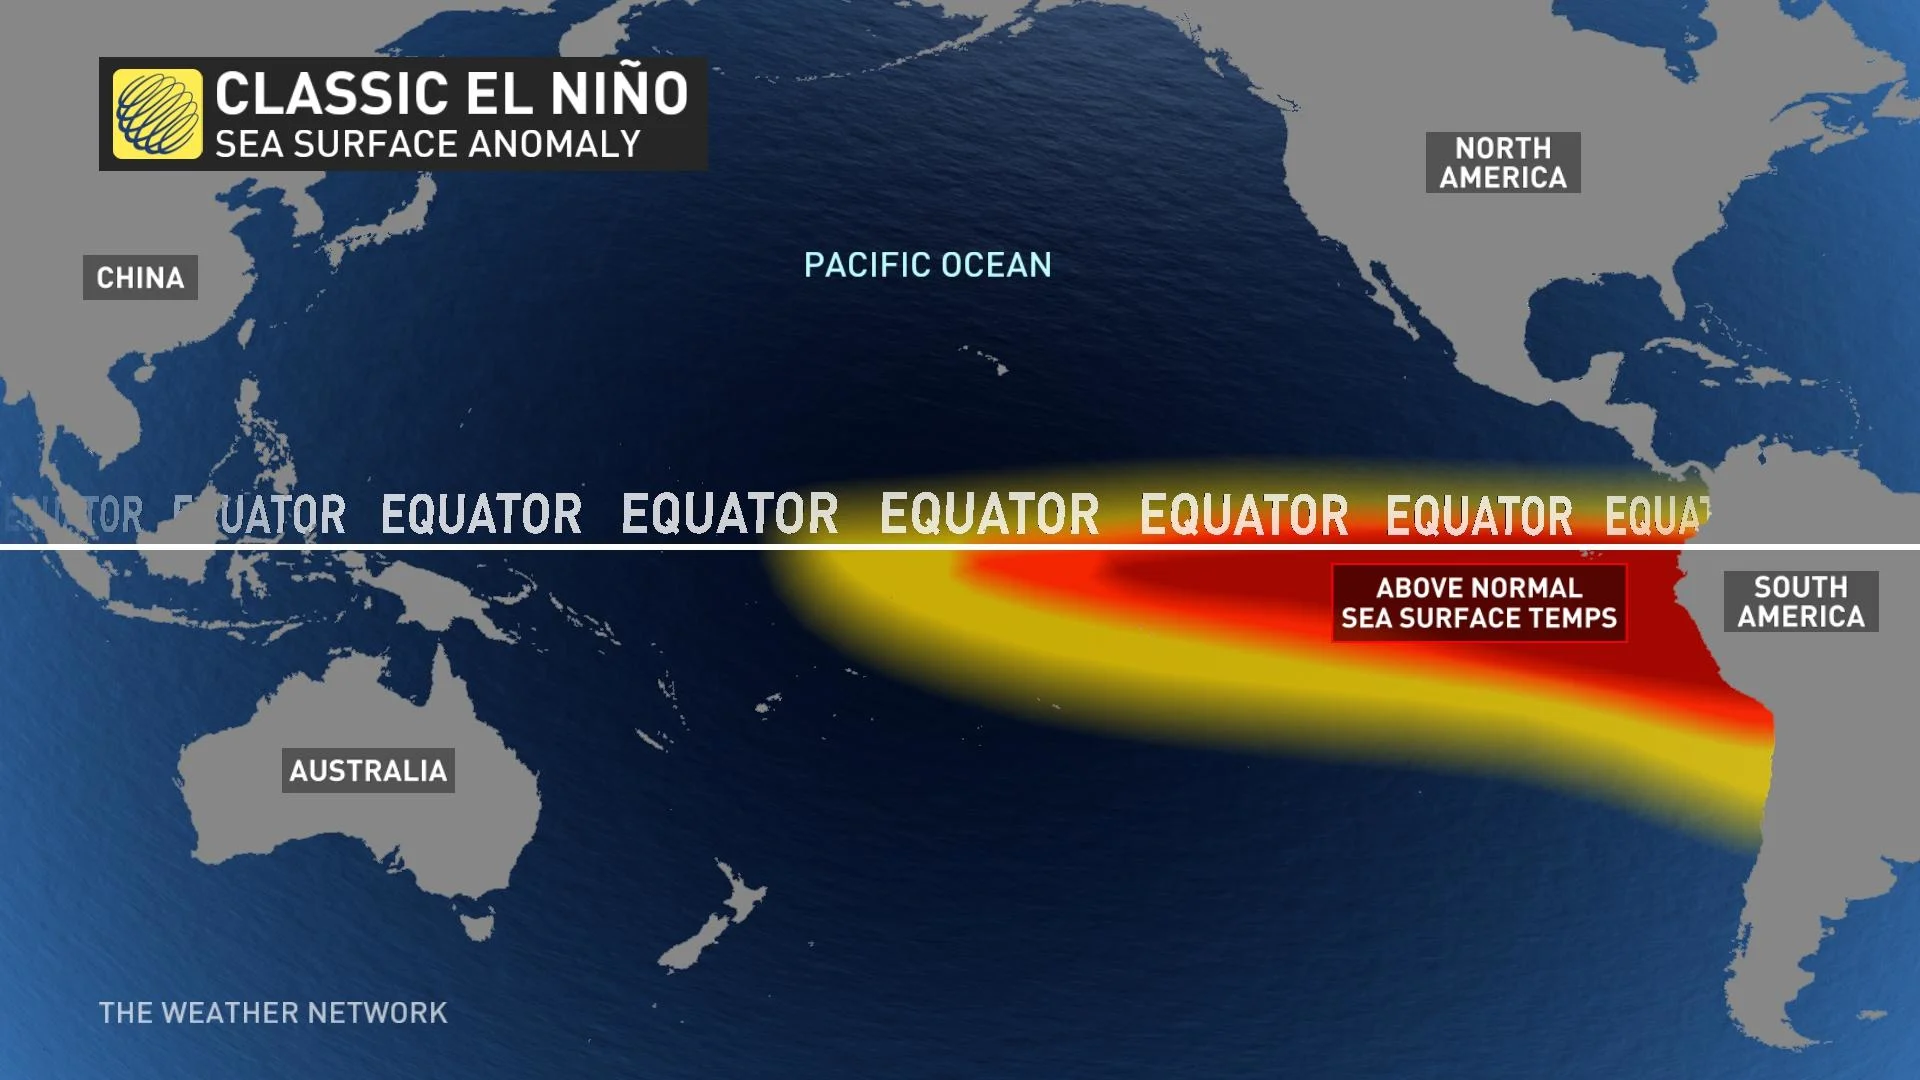 Classic El Niño sea surface temperatures pattern